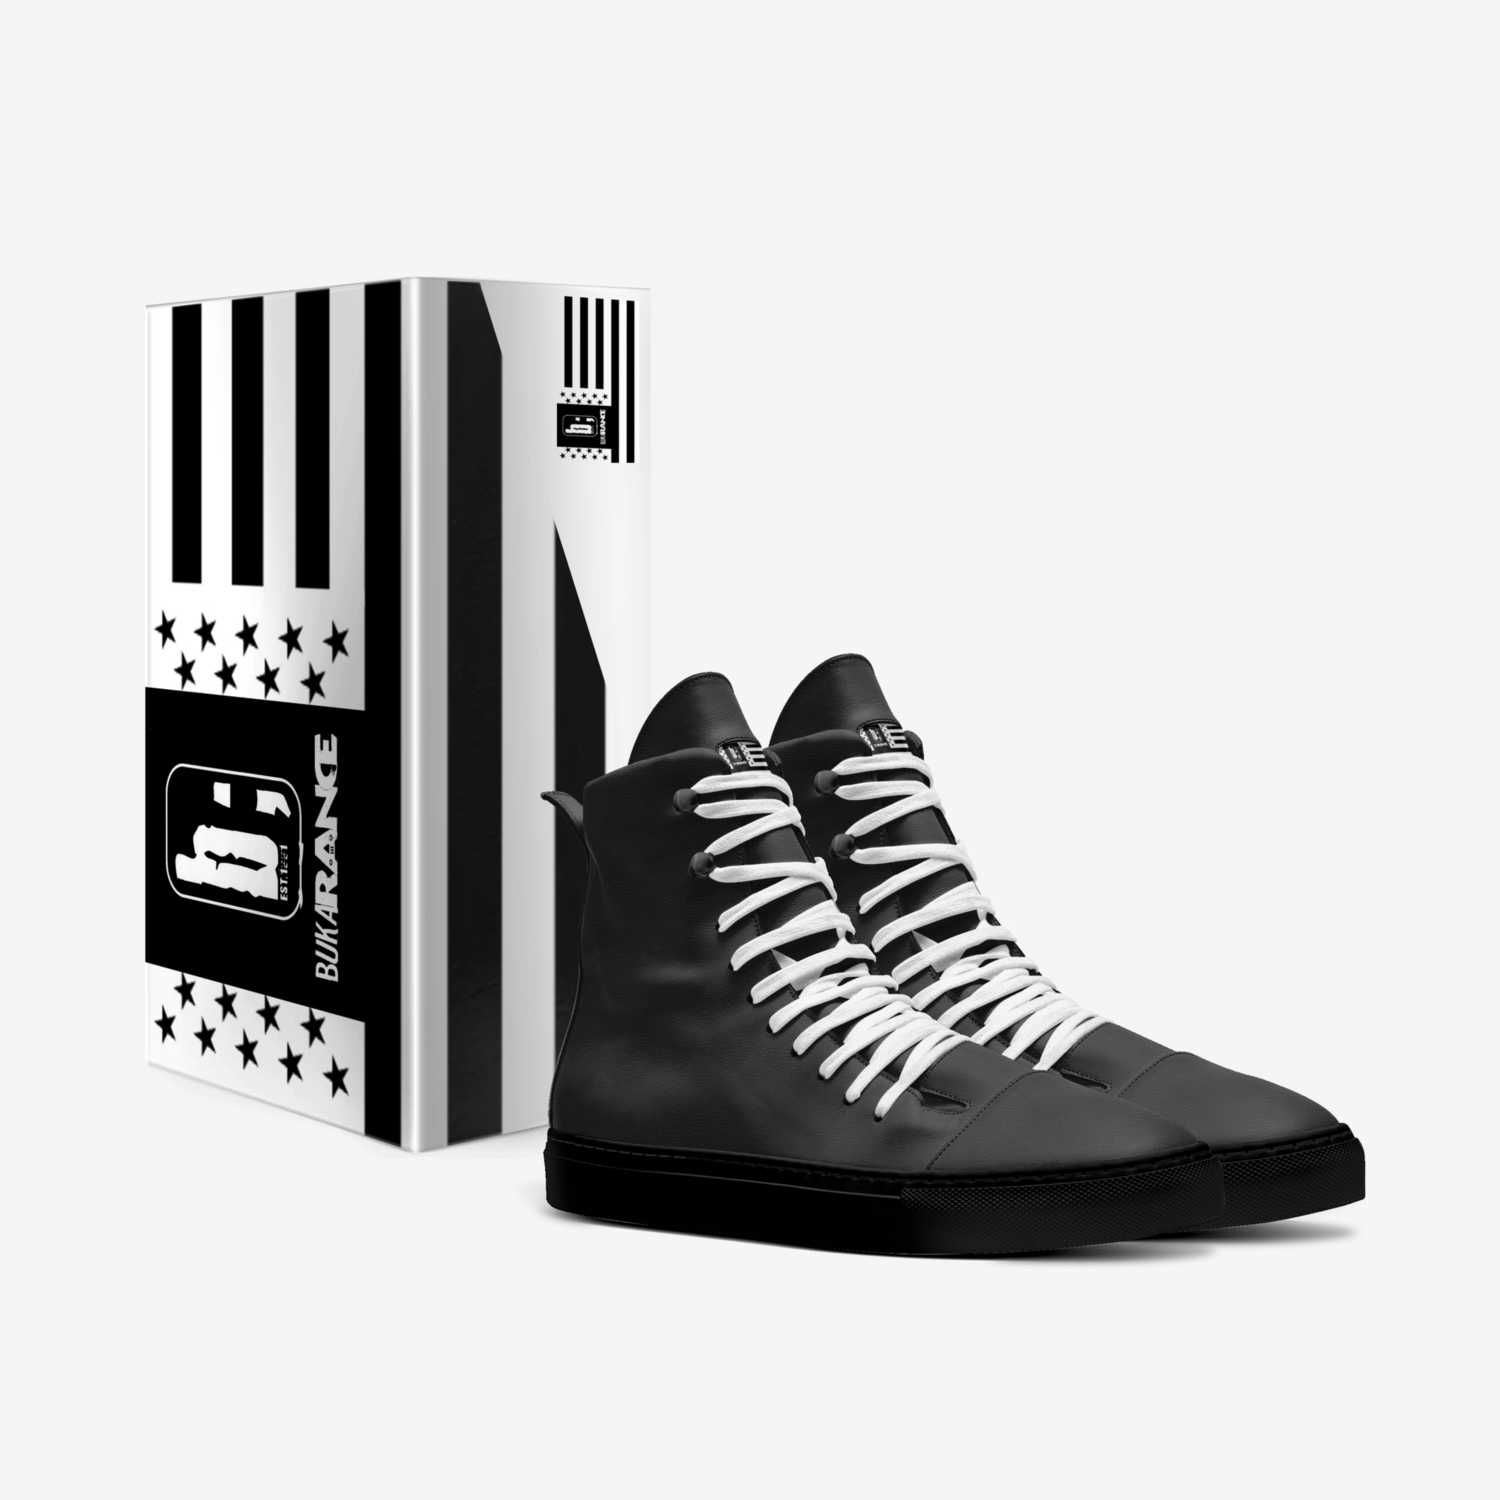 rebel hi custom made in Italy shoes by Cab Cabernet Aficionado Footwear | Box view